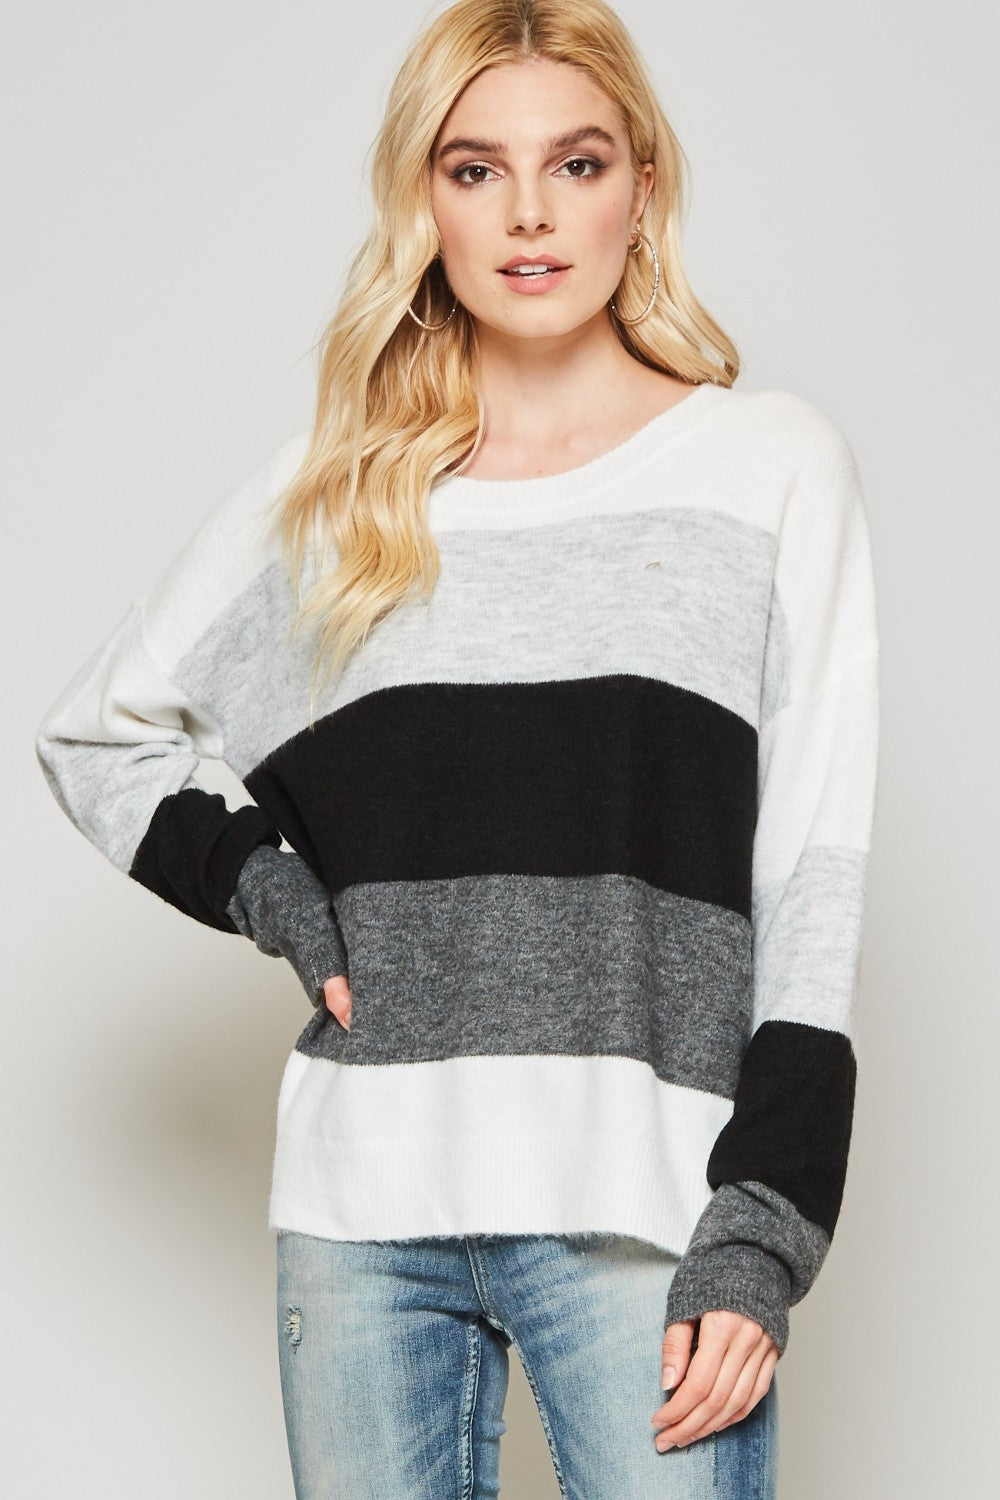 Black & White Classic Sweater 1X